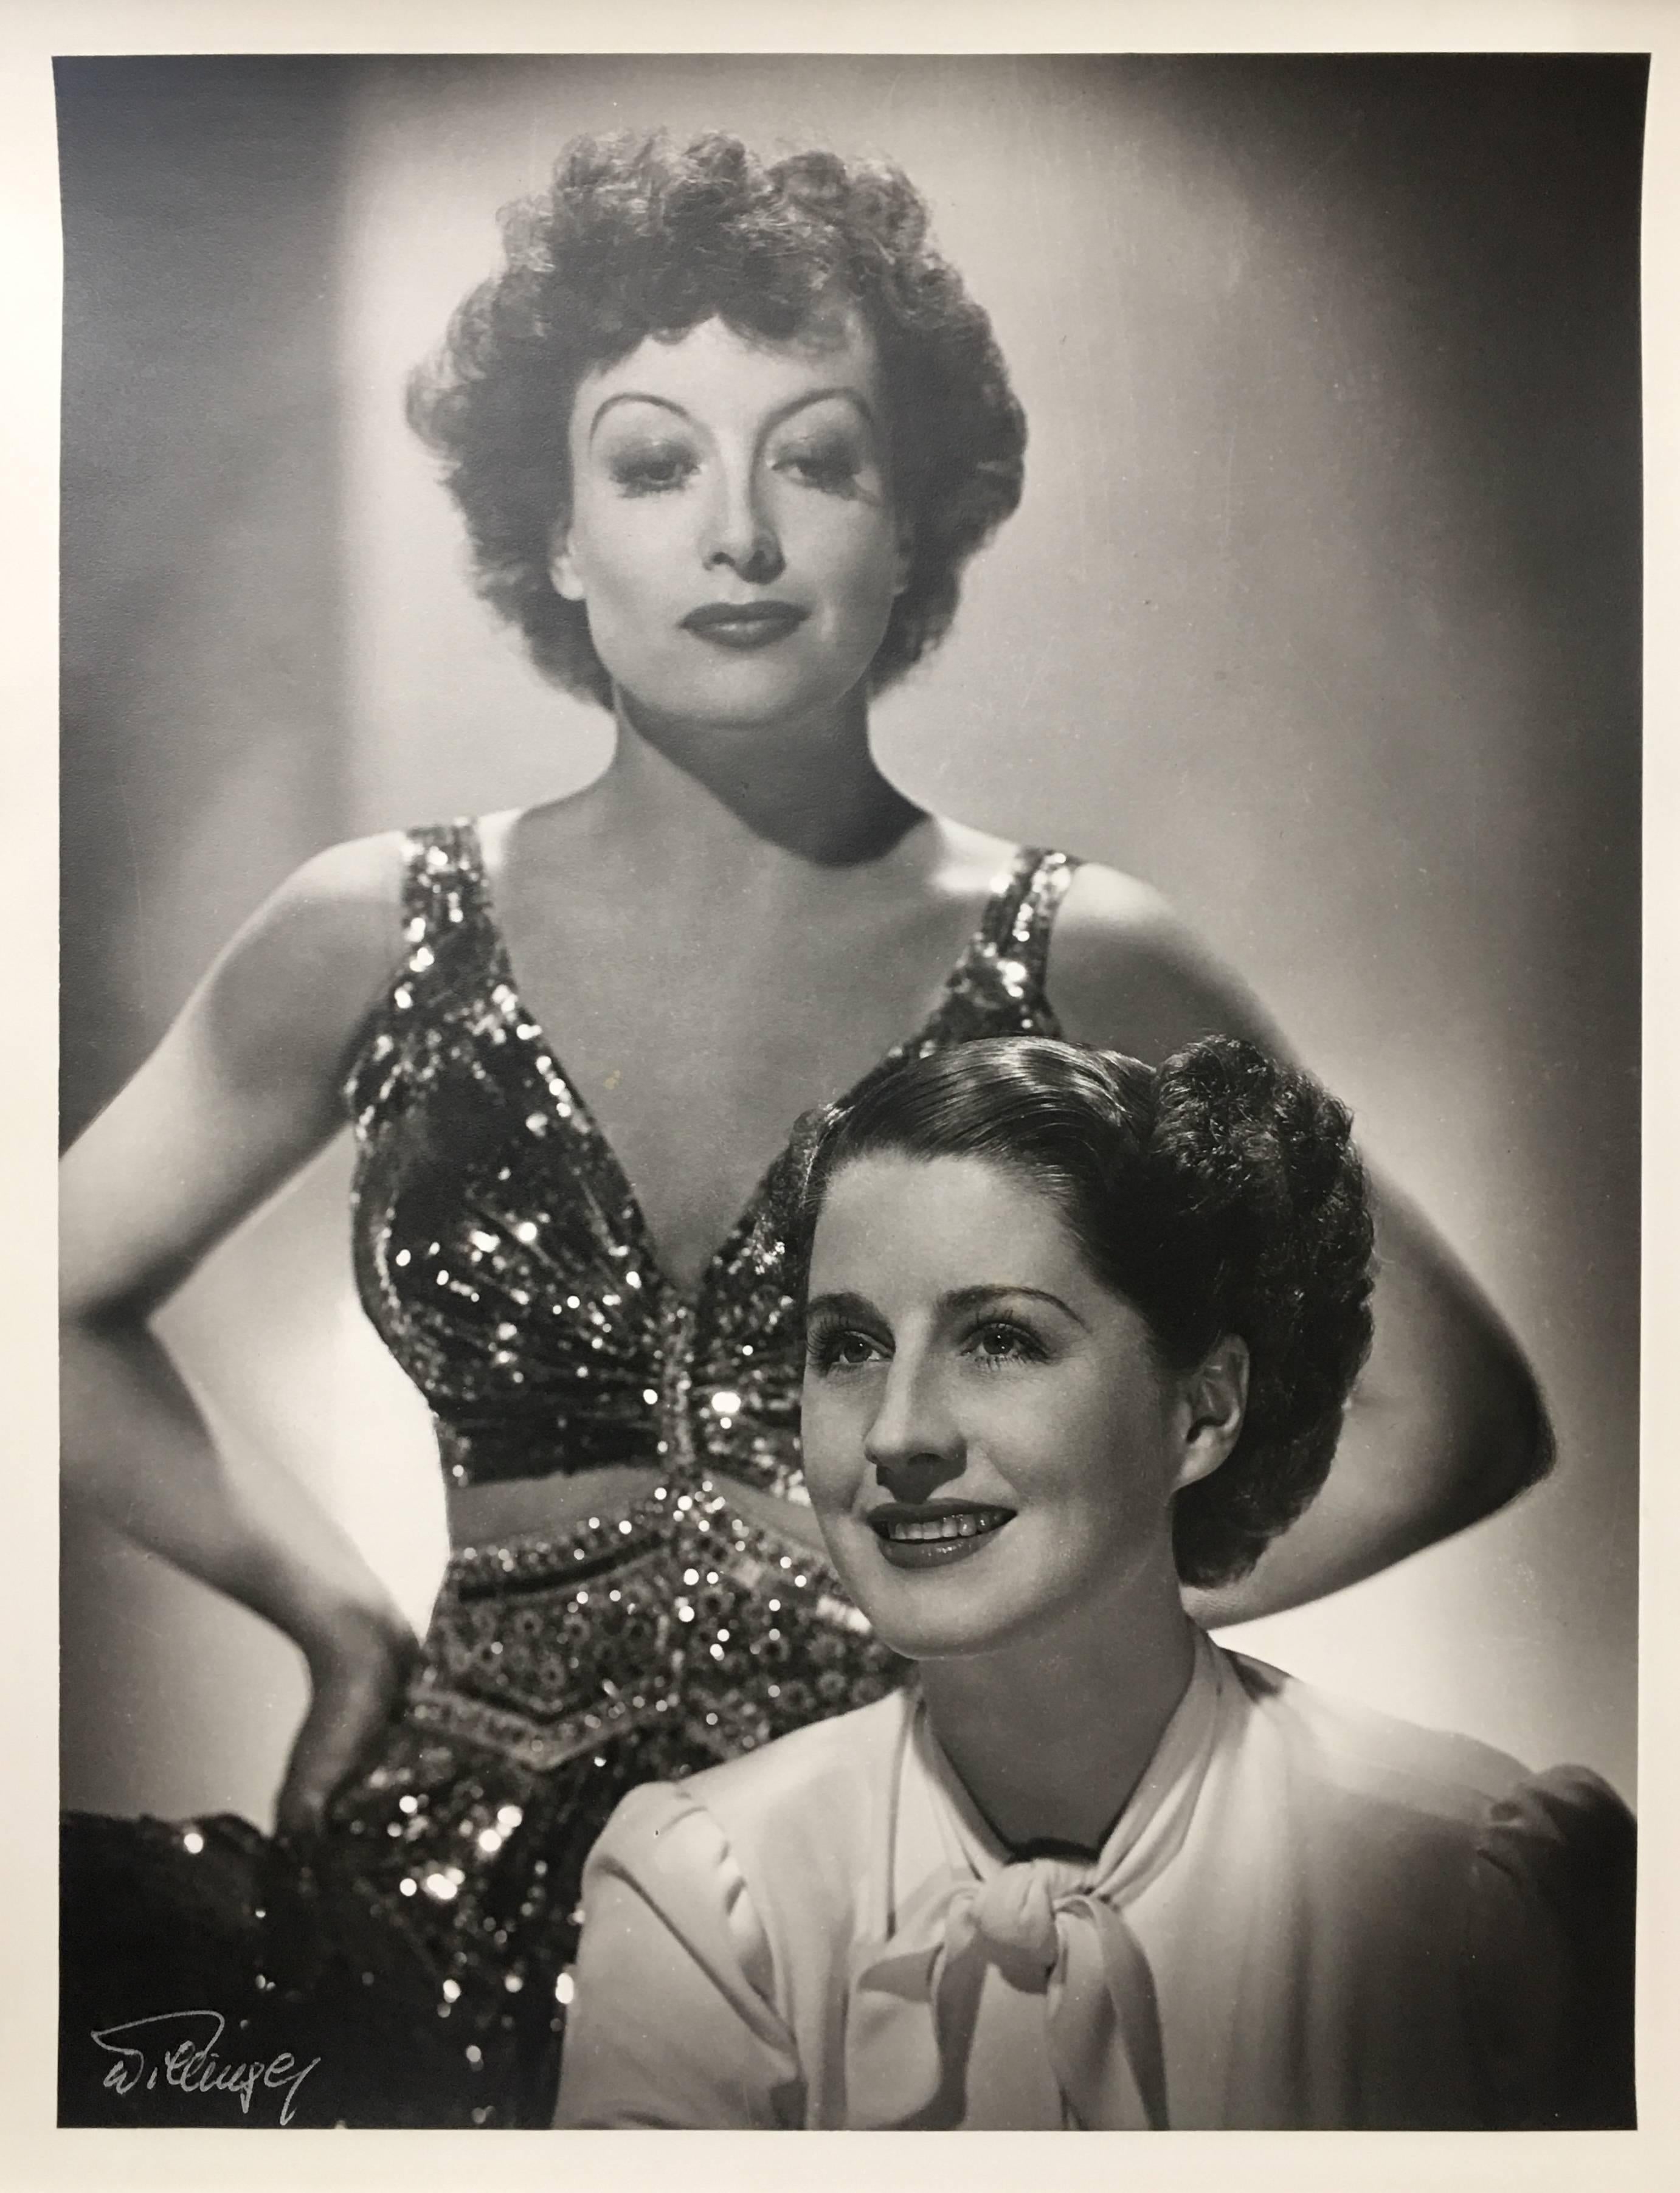 Laszlo Willinger Portrait Photograph - Joan Crawford and Norma Shearer